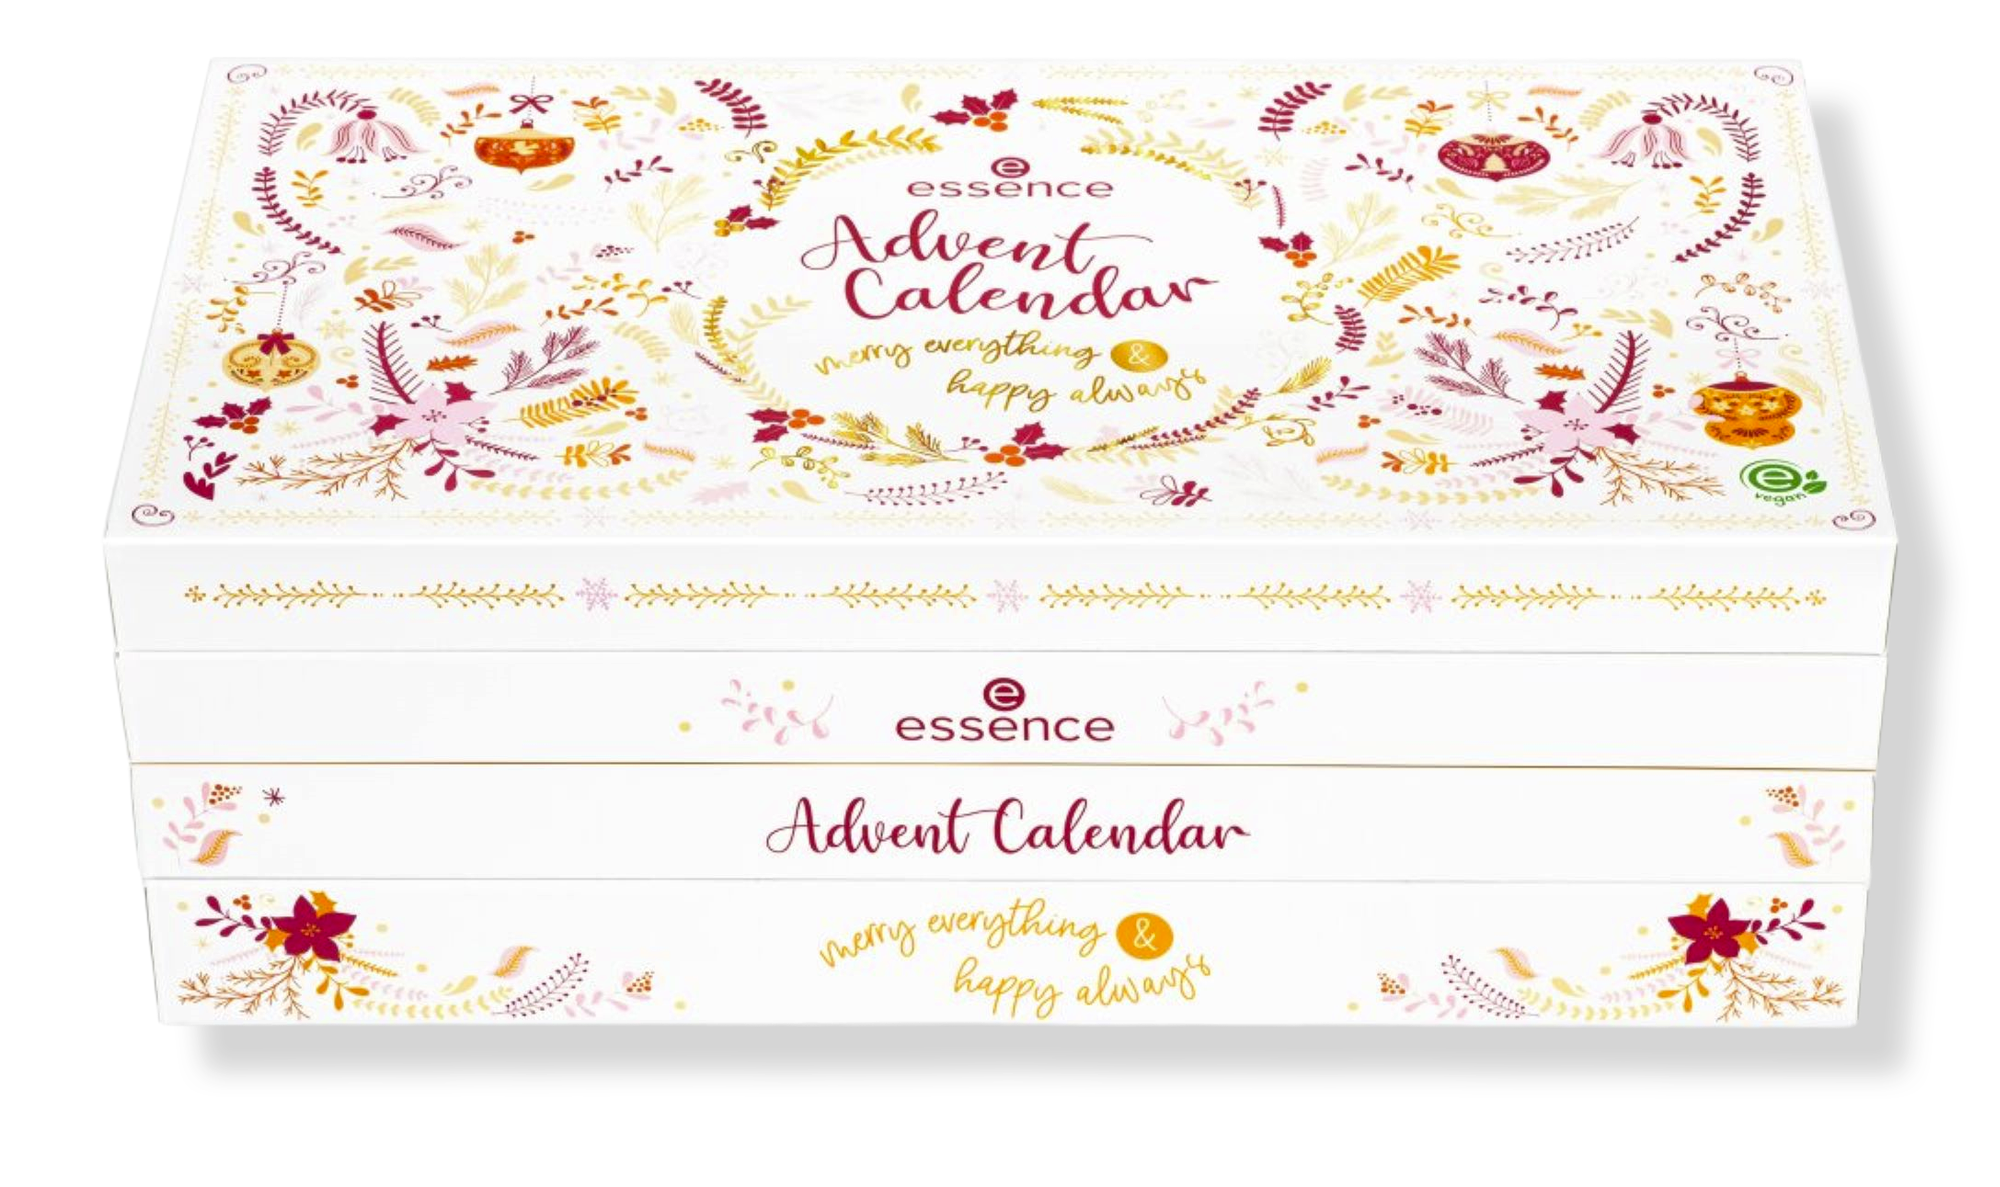 - Calendar: 2023 Essence Everything Merry Happy & Subscription Always! Cosmetics Beauty Hello Advent